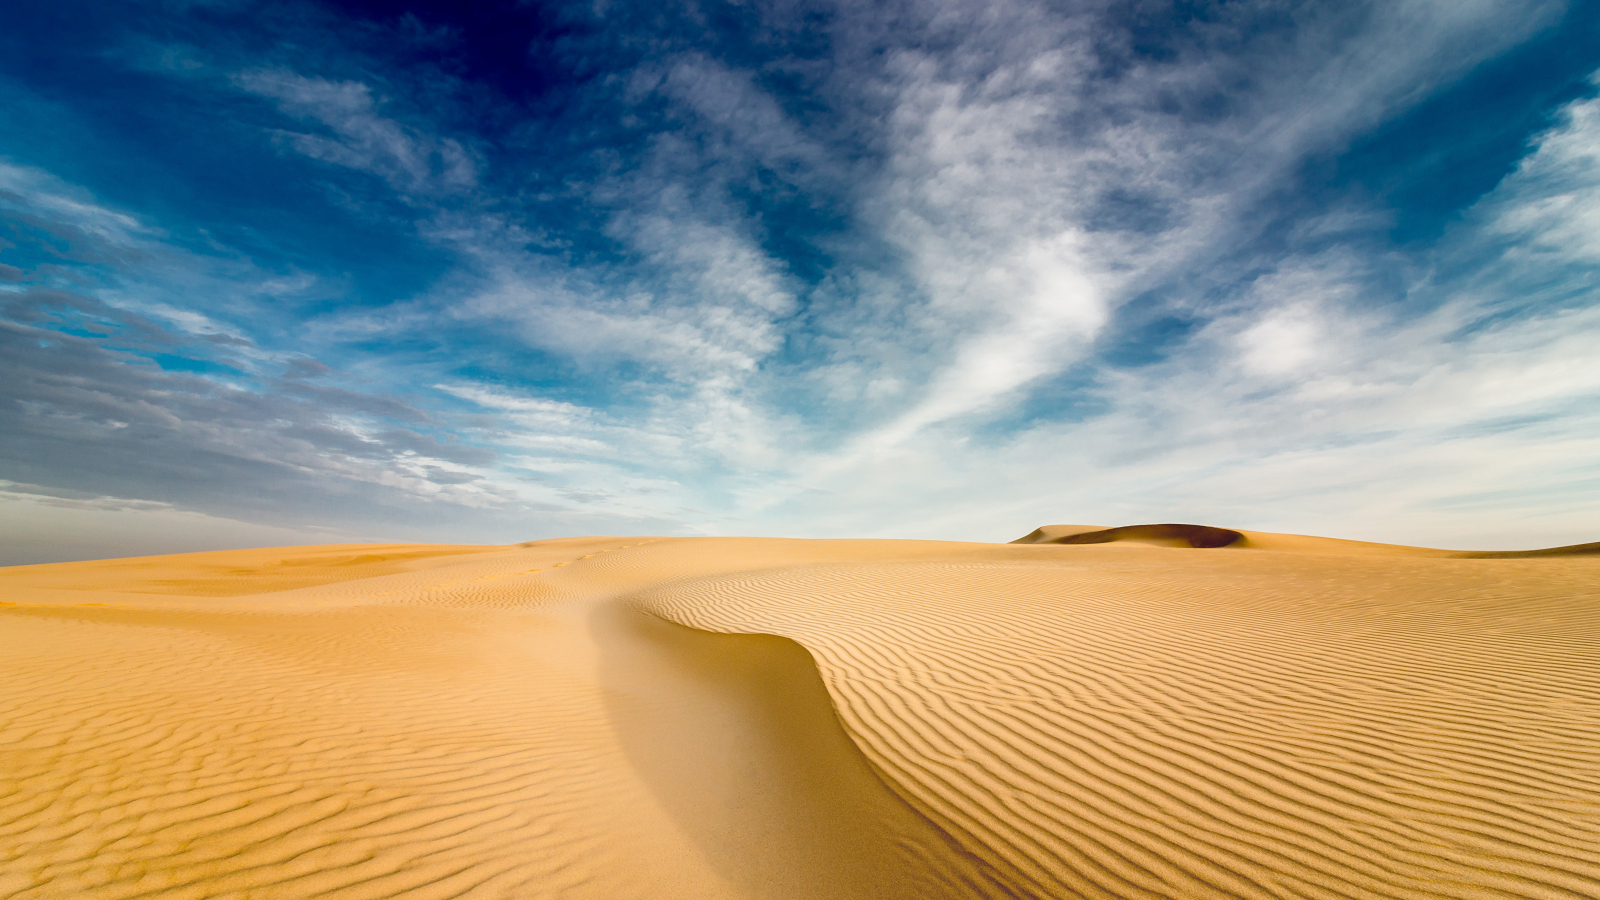 Download wallpaper 1600x900 desert sand, dunes, landscape, sunny day ...